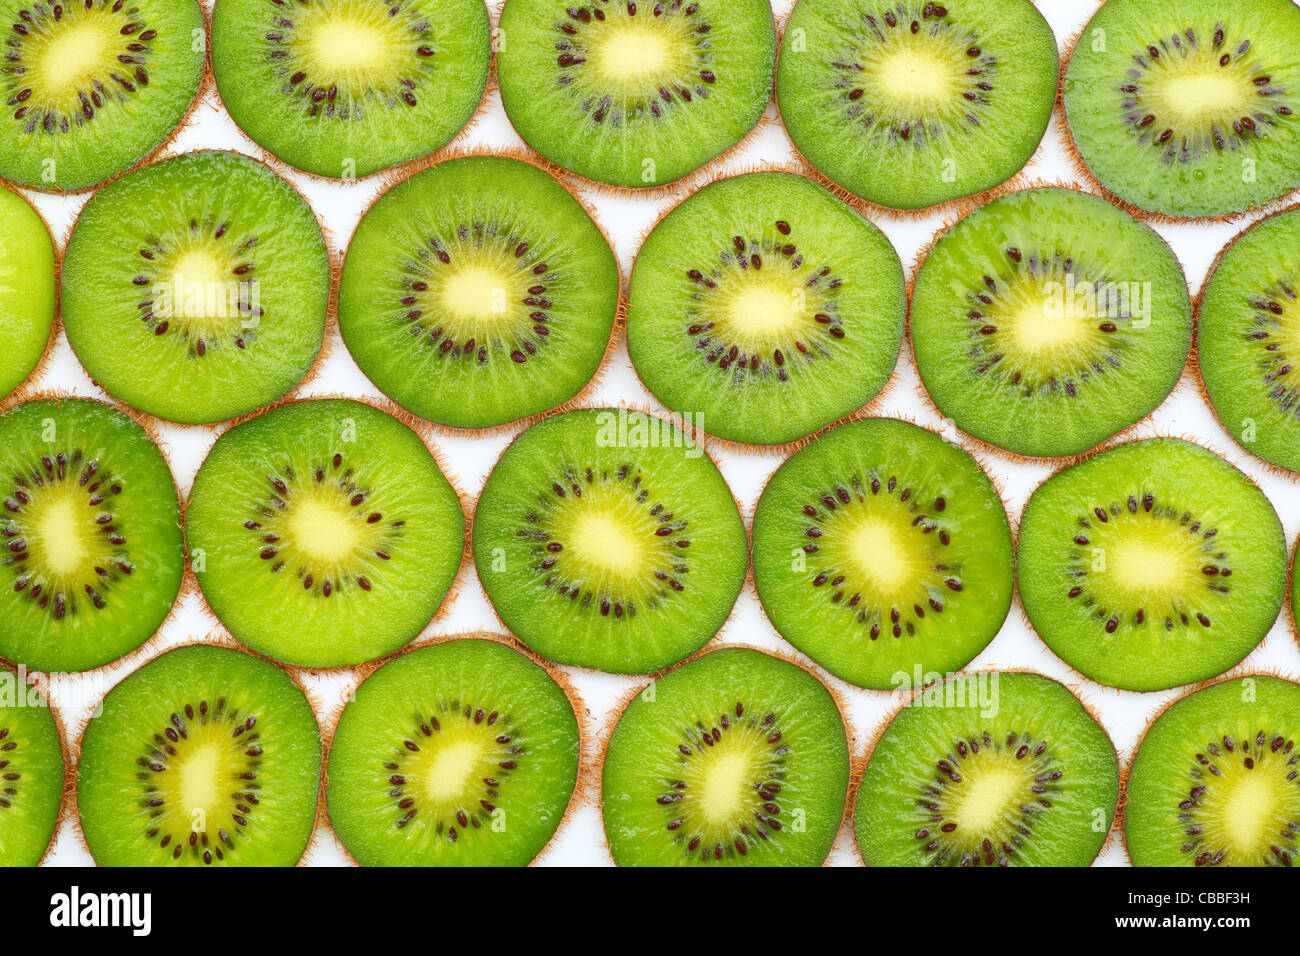 Close up of sliced pieces of kiwifruit Stock Photo